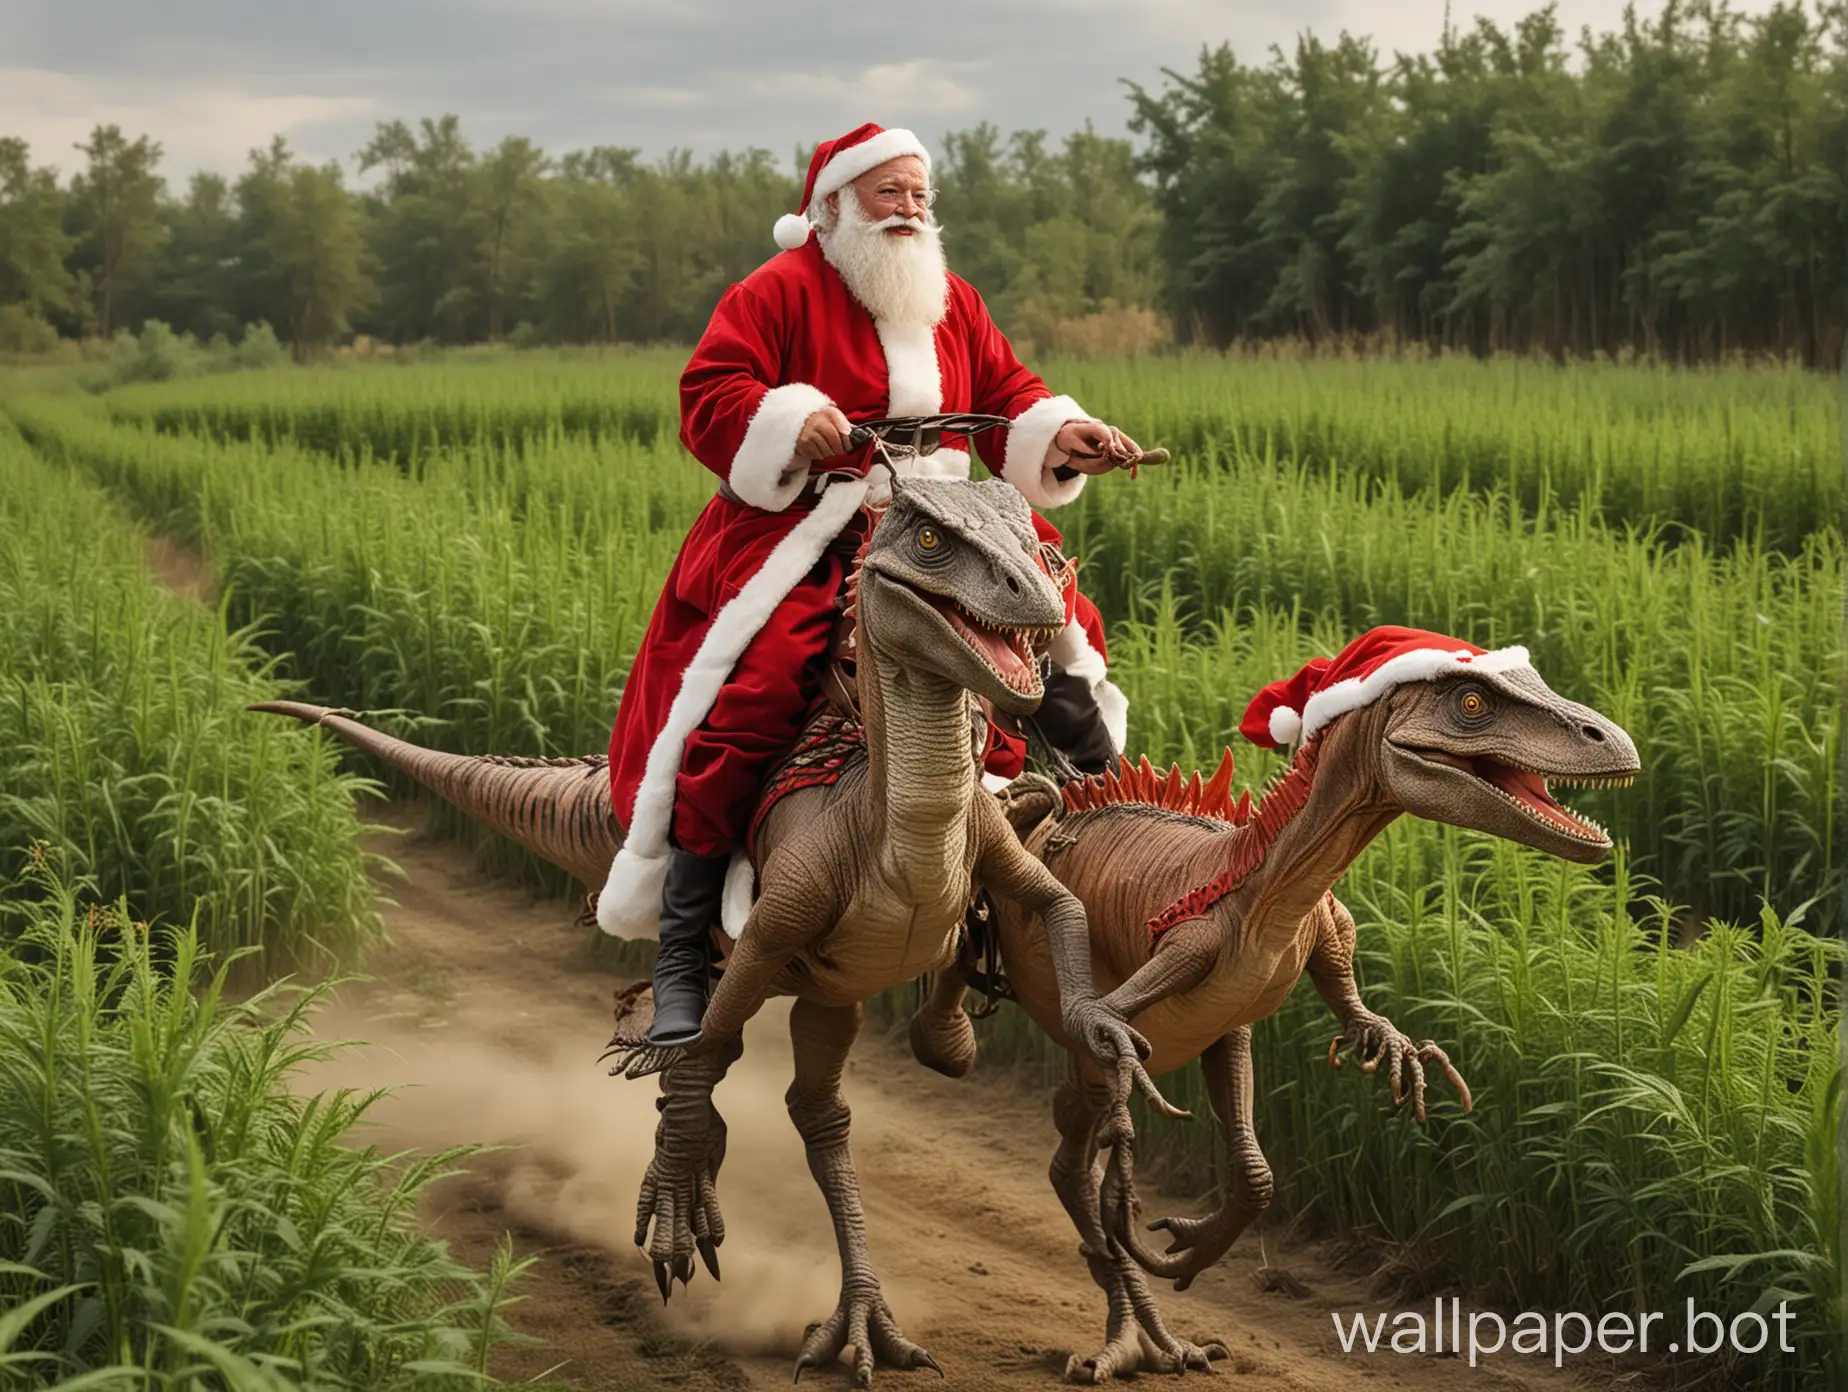 Santa Claus in traditional attire rides a velociraptor through a hemp field with tall bushes.